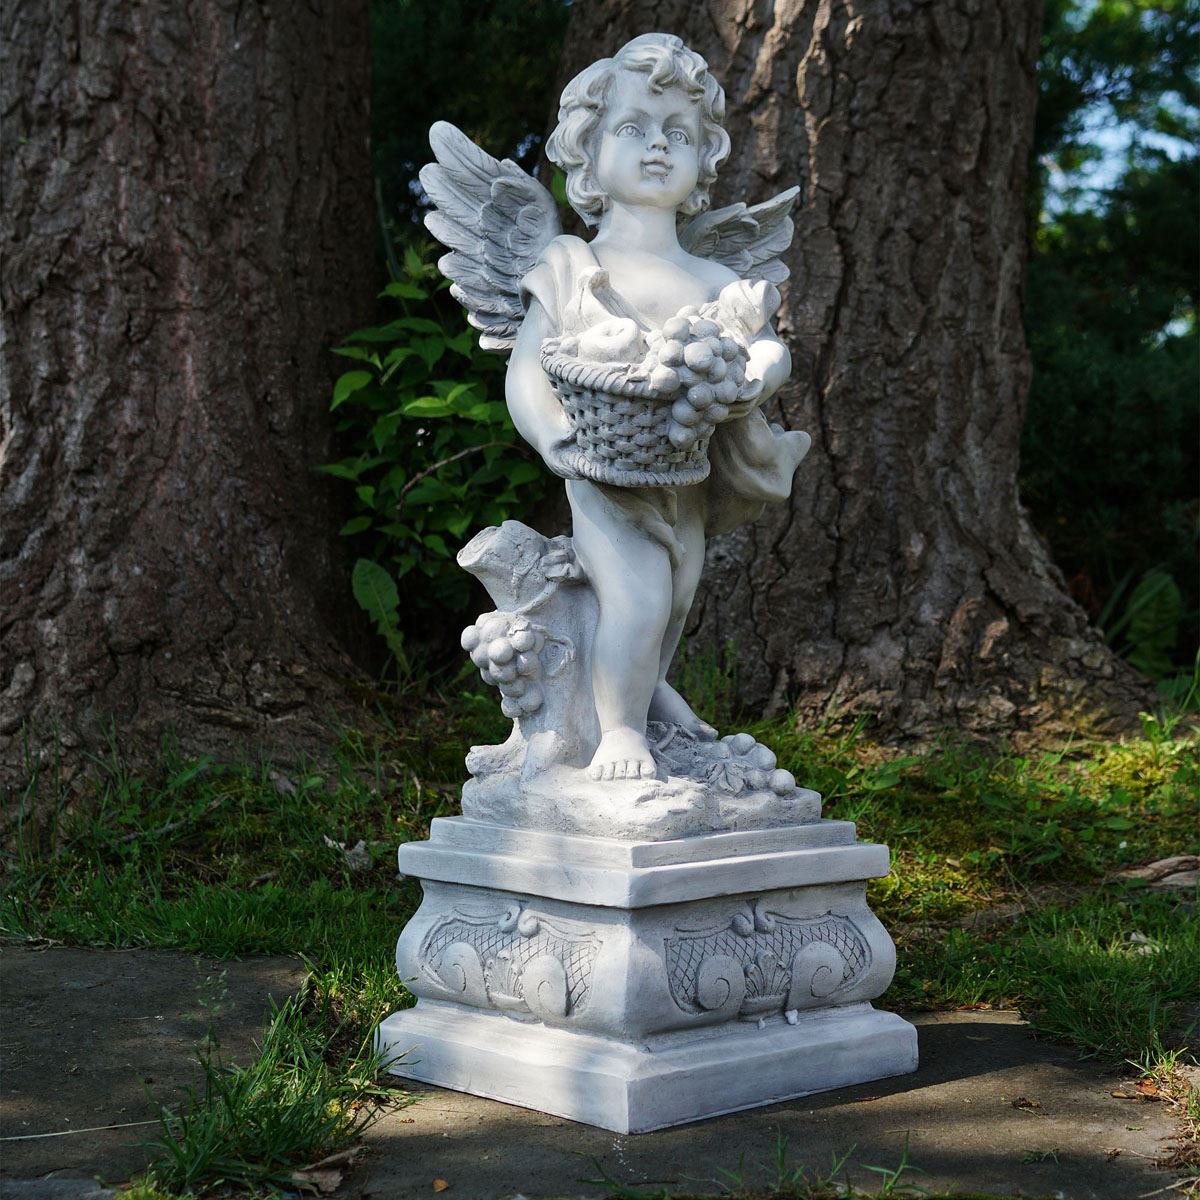 Northlight Seasonal Cherub Angel On A Pedestal With Fruit Basket